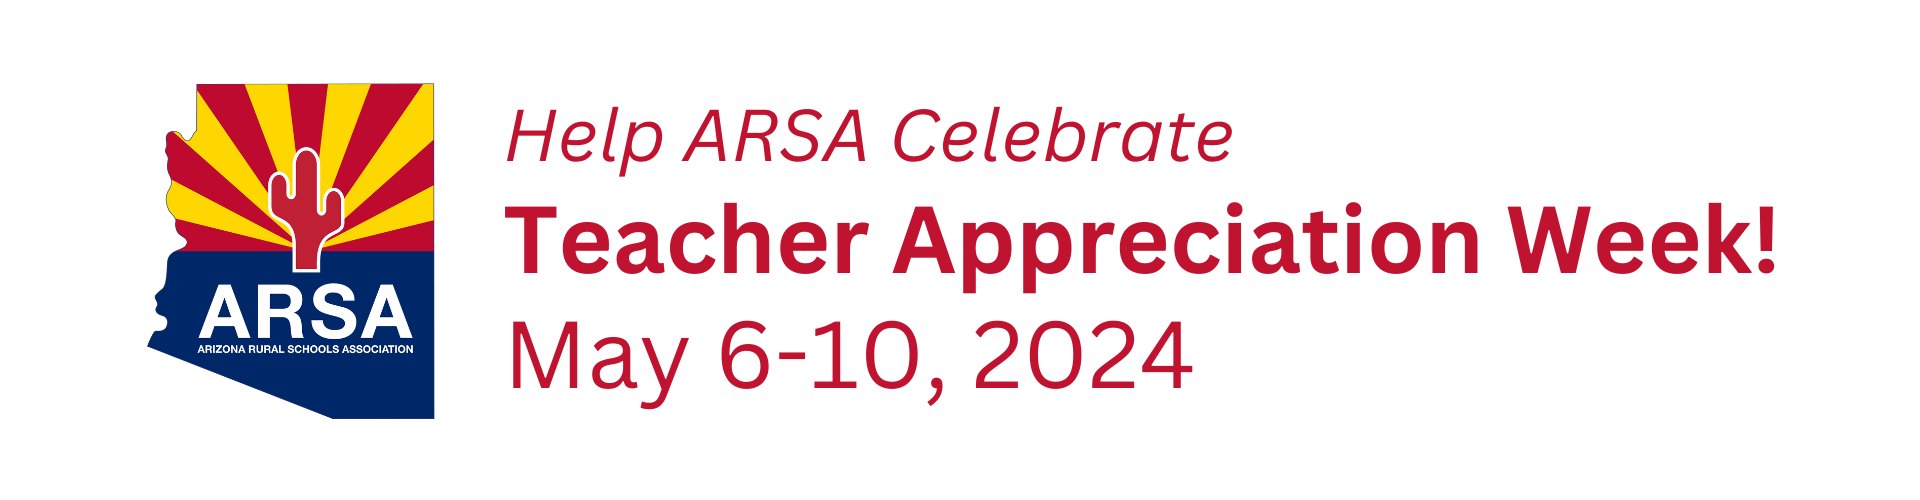 Help ARSA Celebrate Teacher Appreciation Week